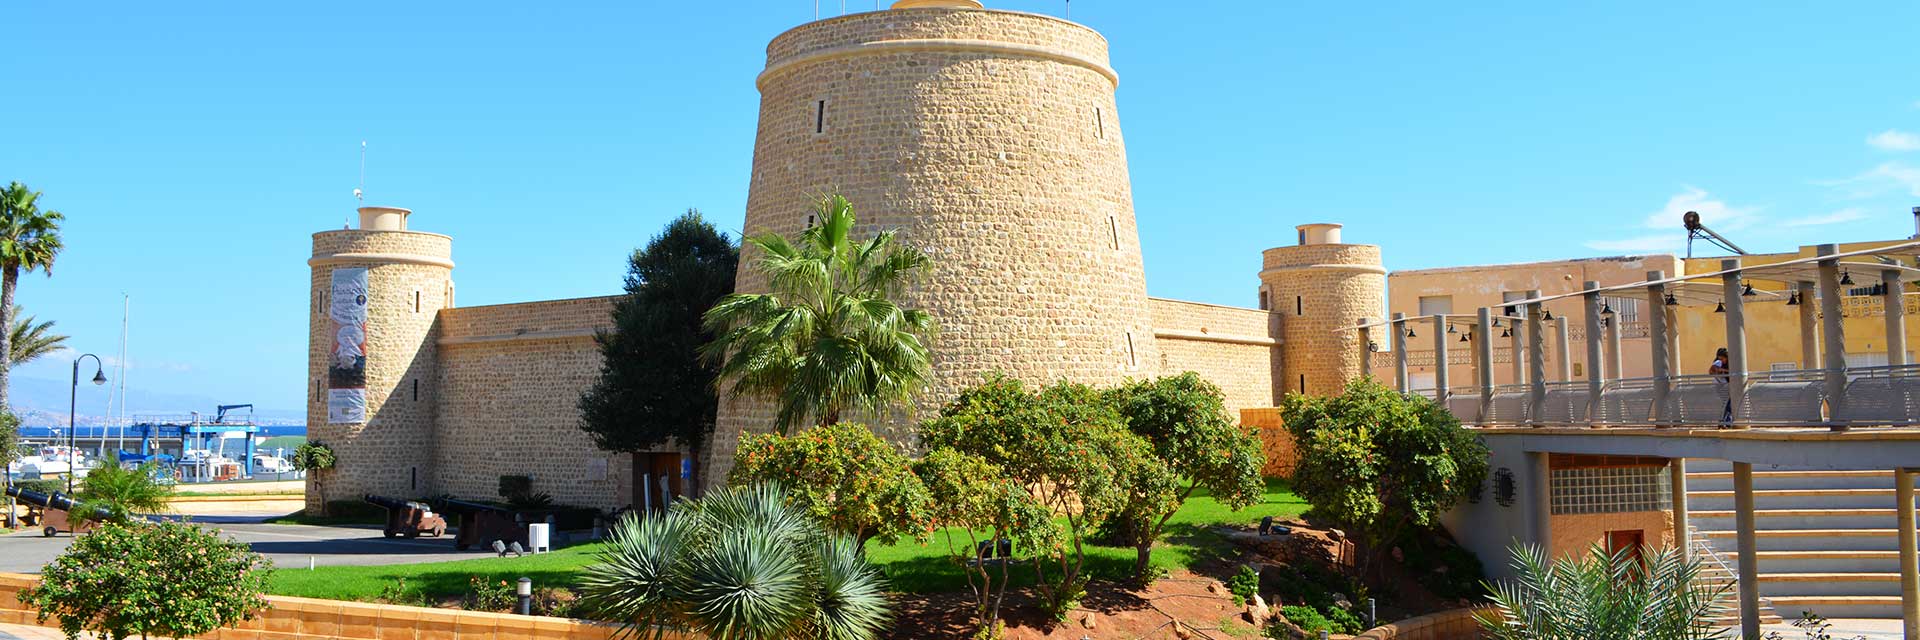 Castillo de Santa Ana Roquetas de Mar ▶ Costa de Almería